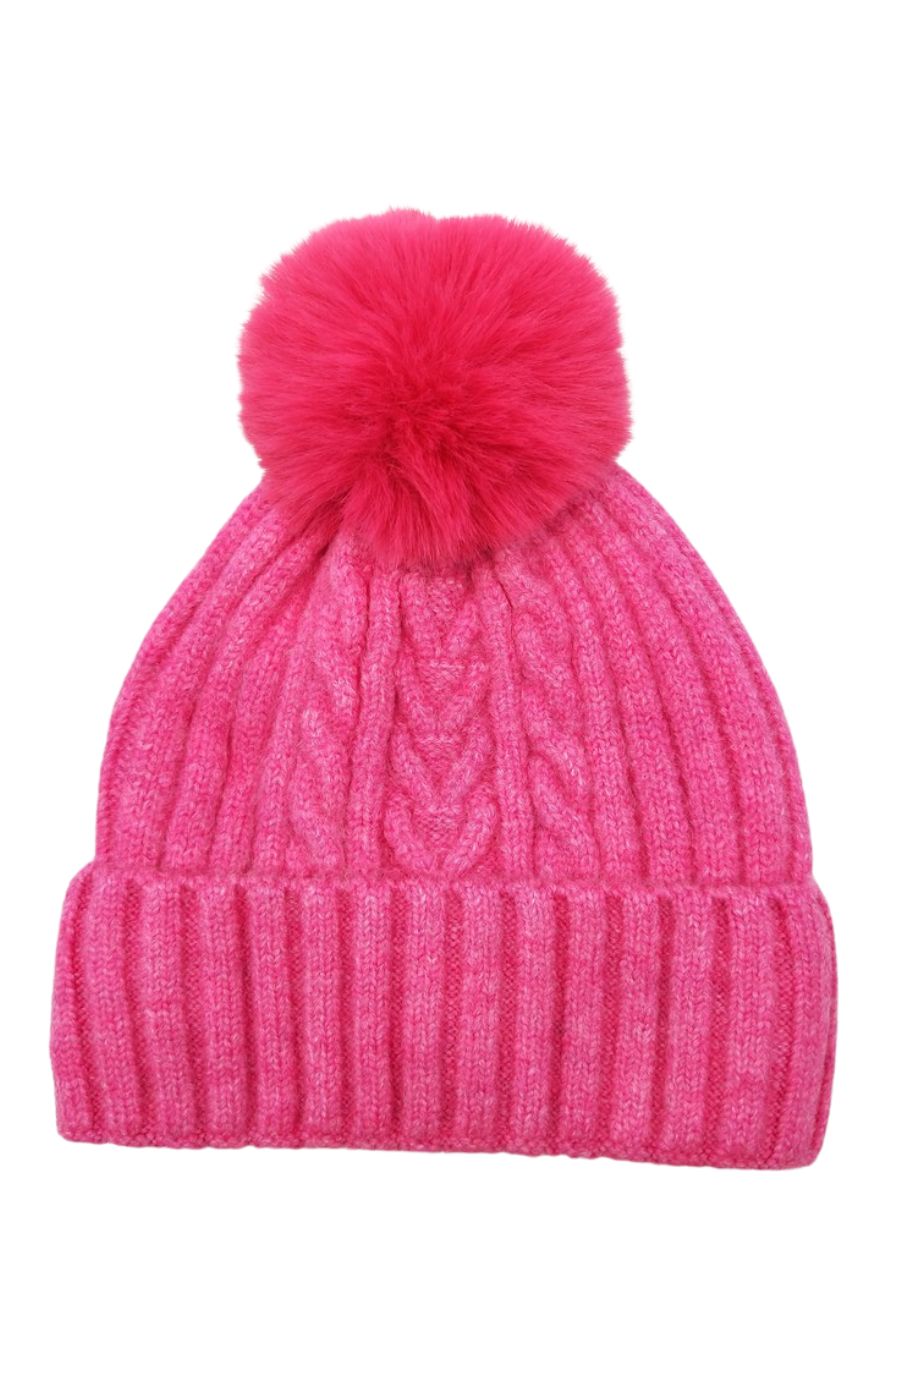 PomPom Hat in Pink